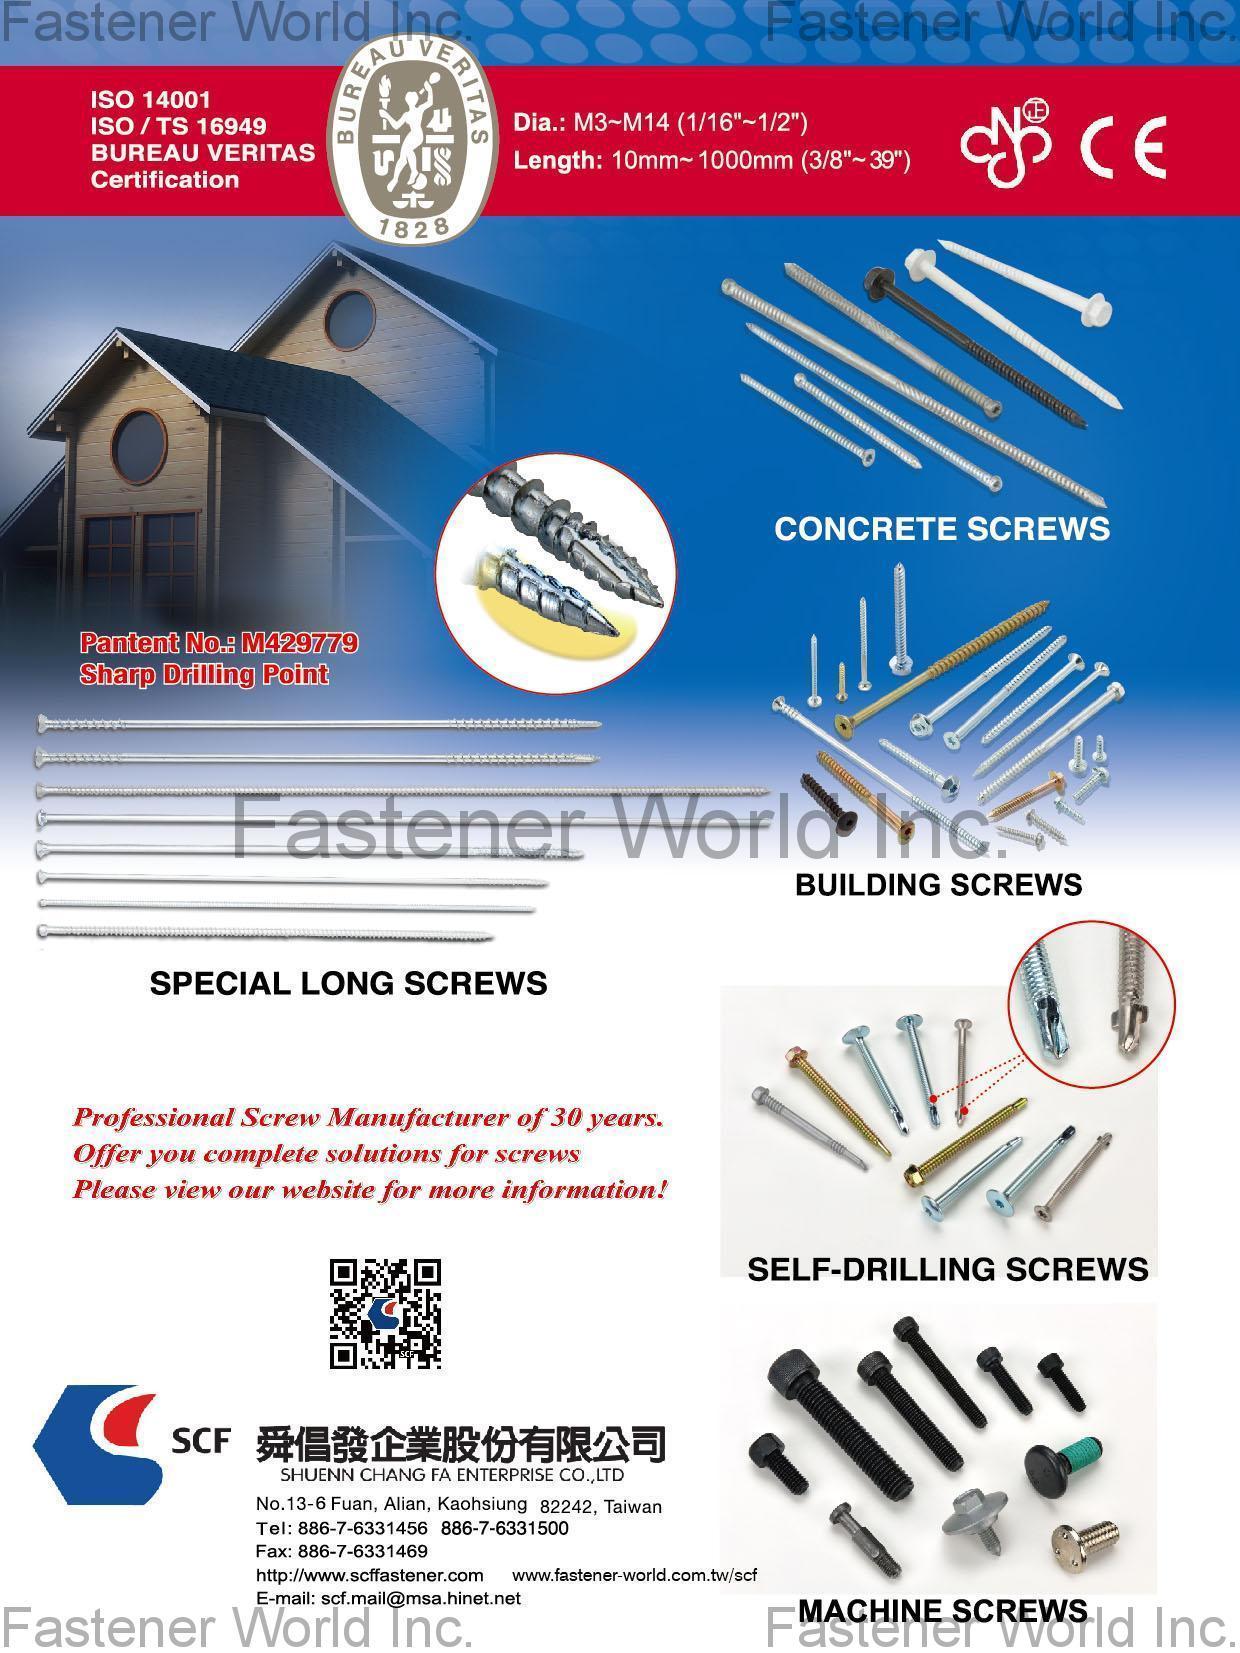 SHUENN CHANG FA ENTERPRISE CO., LTD.  , Special Long Screws / Self-drilling Screws / Auto Parts / Chipboard Screws / Self-drilling Screws , Special Screws